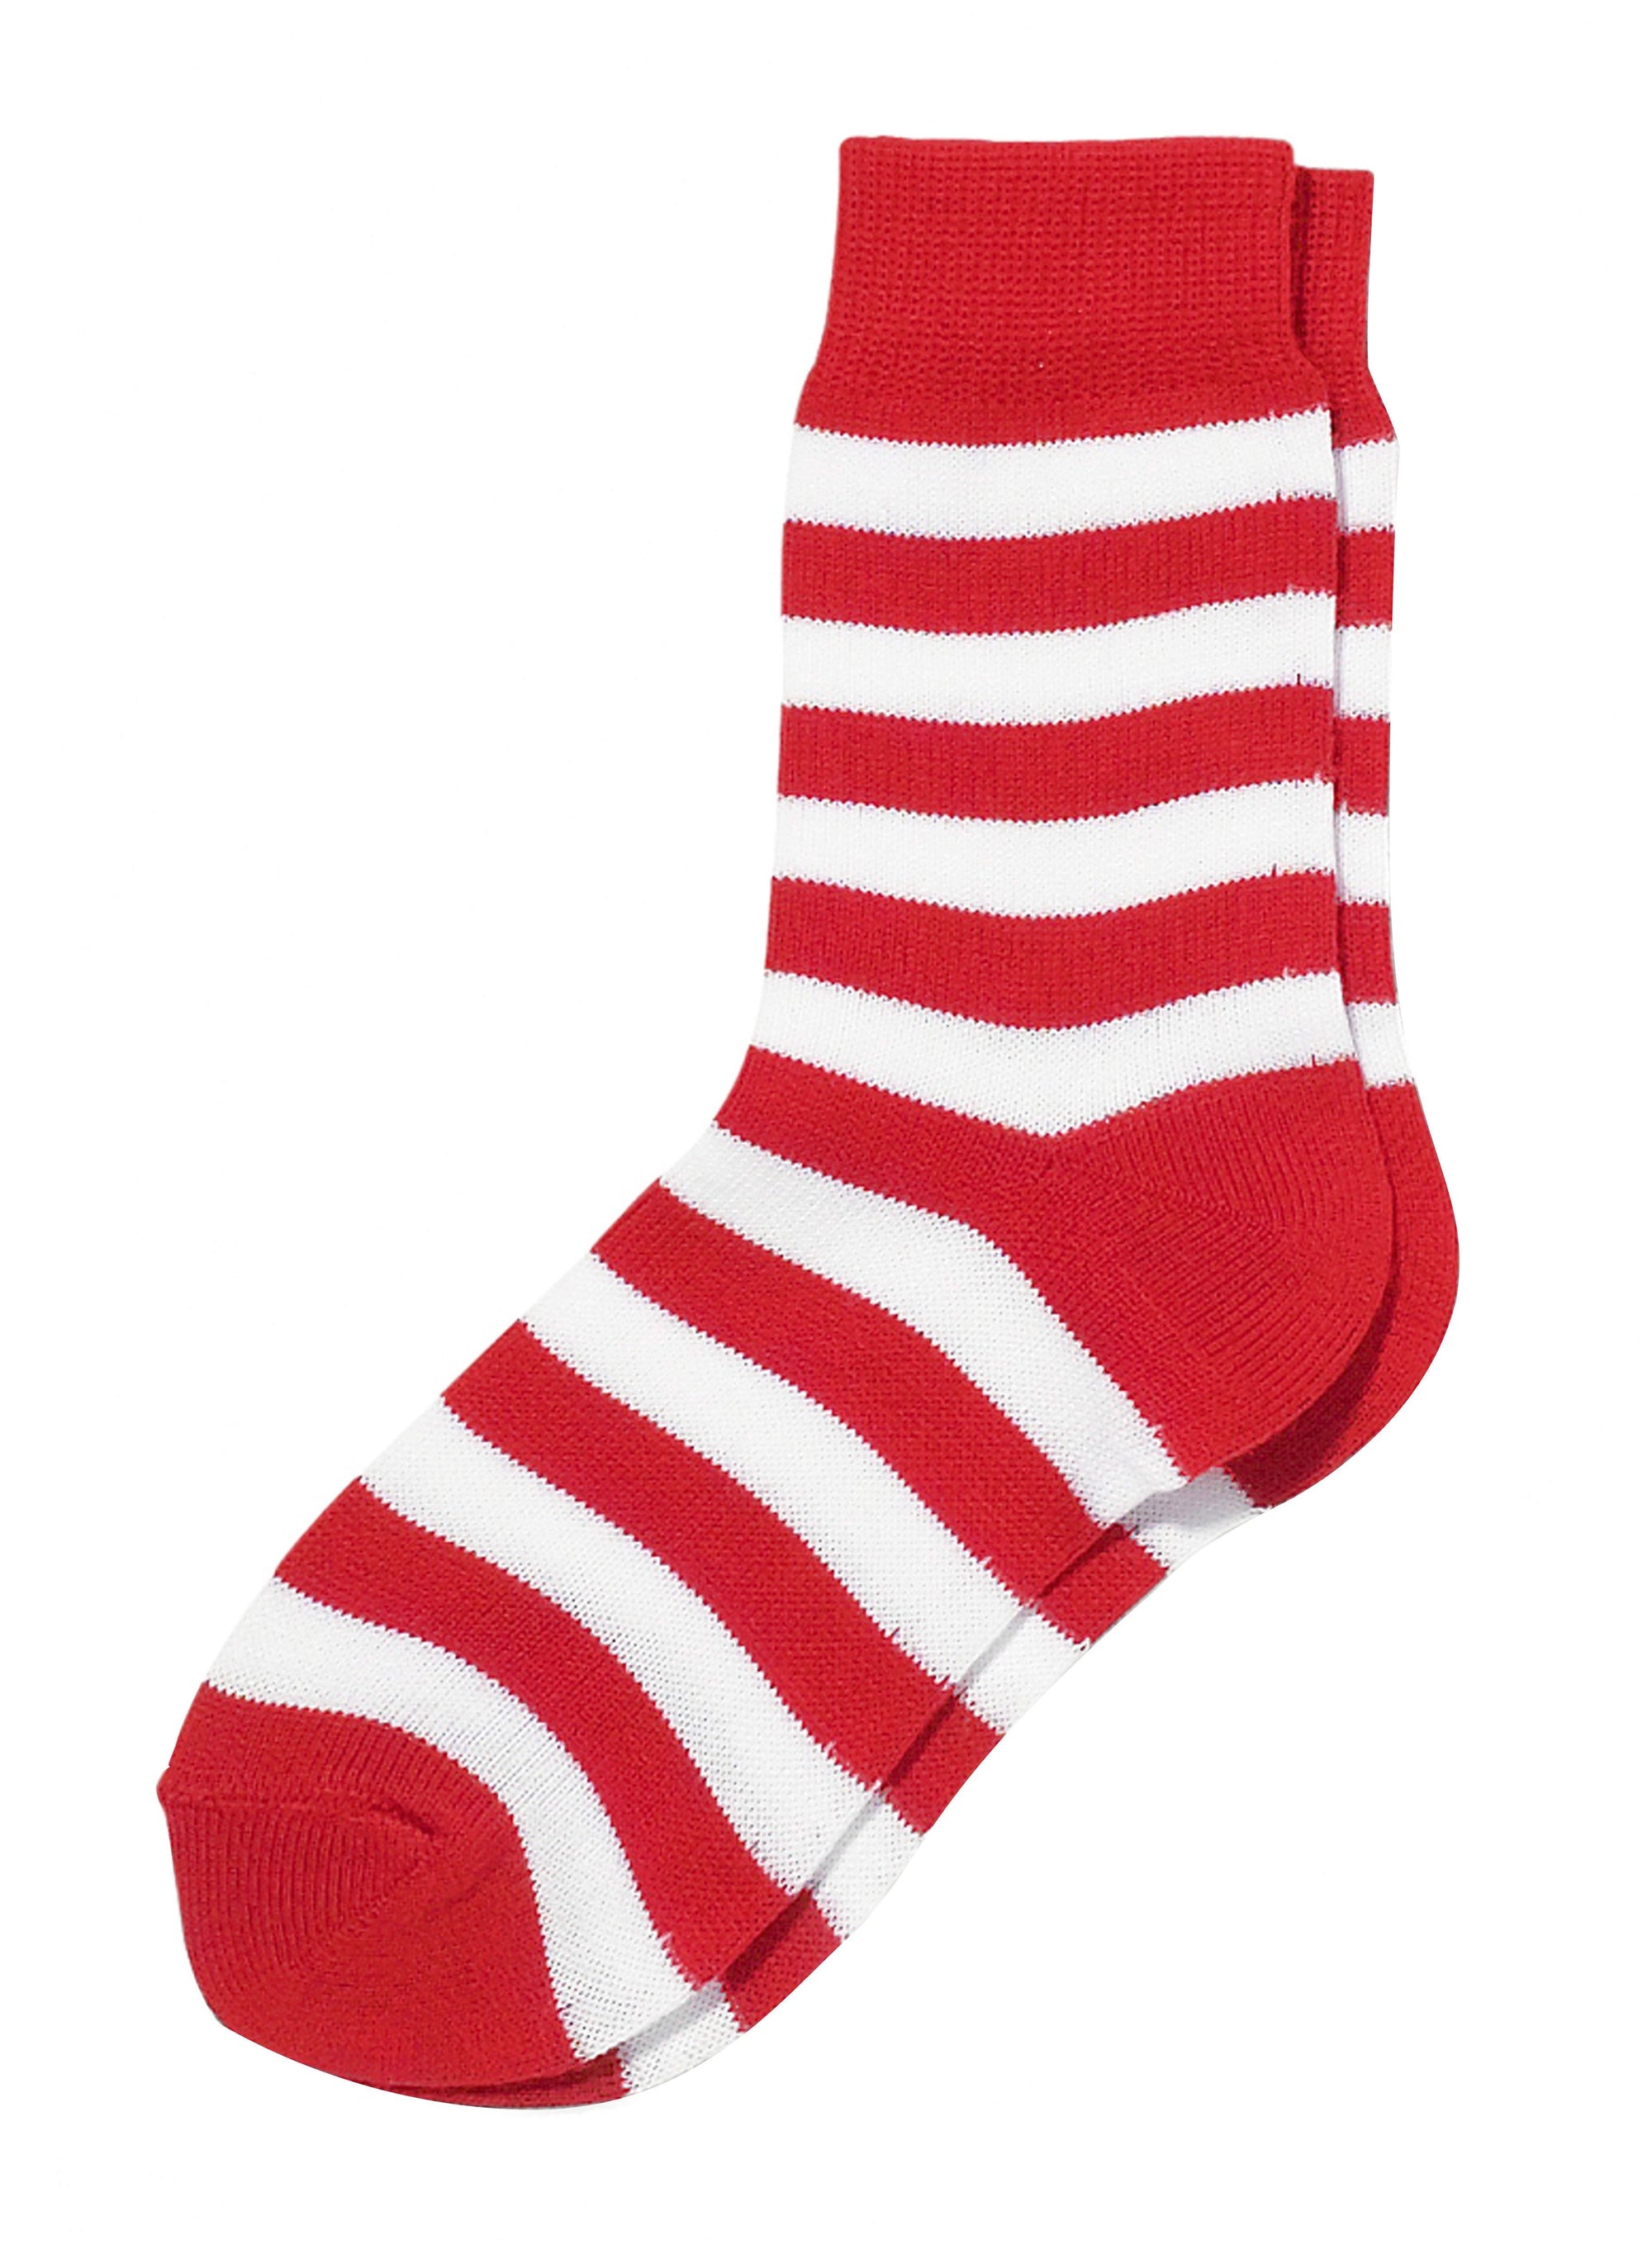 Marimekko, Raitsu Socks, Red/White / 37-39- Placewares